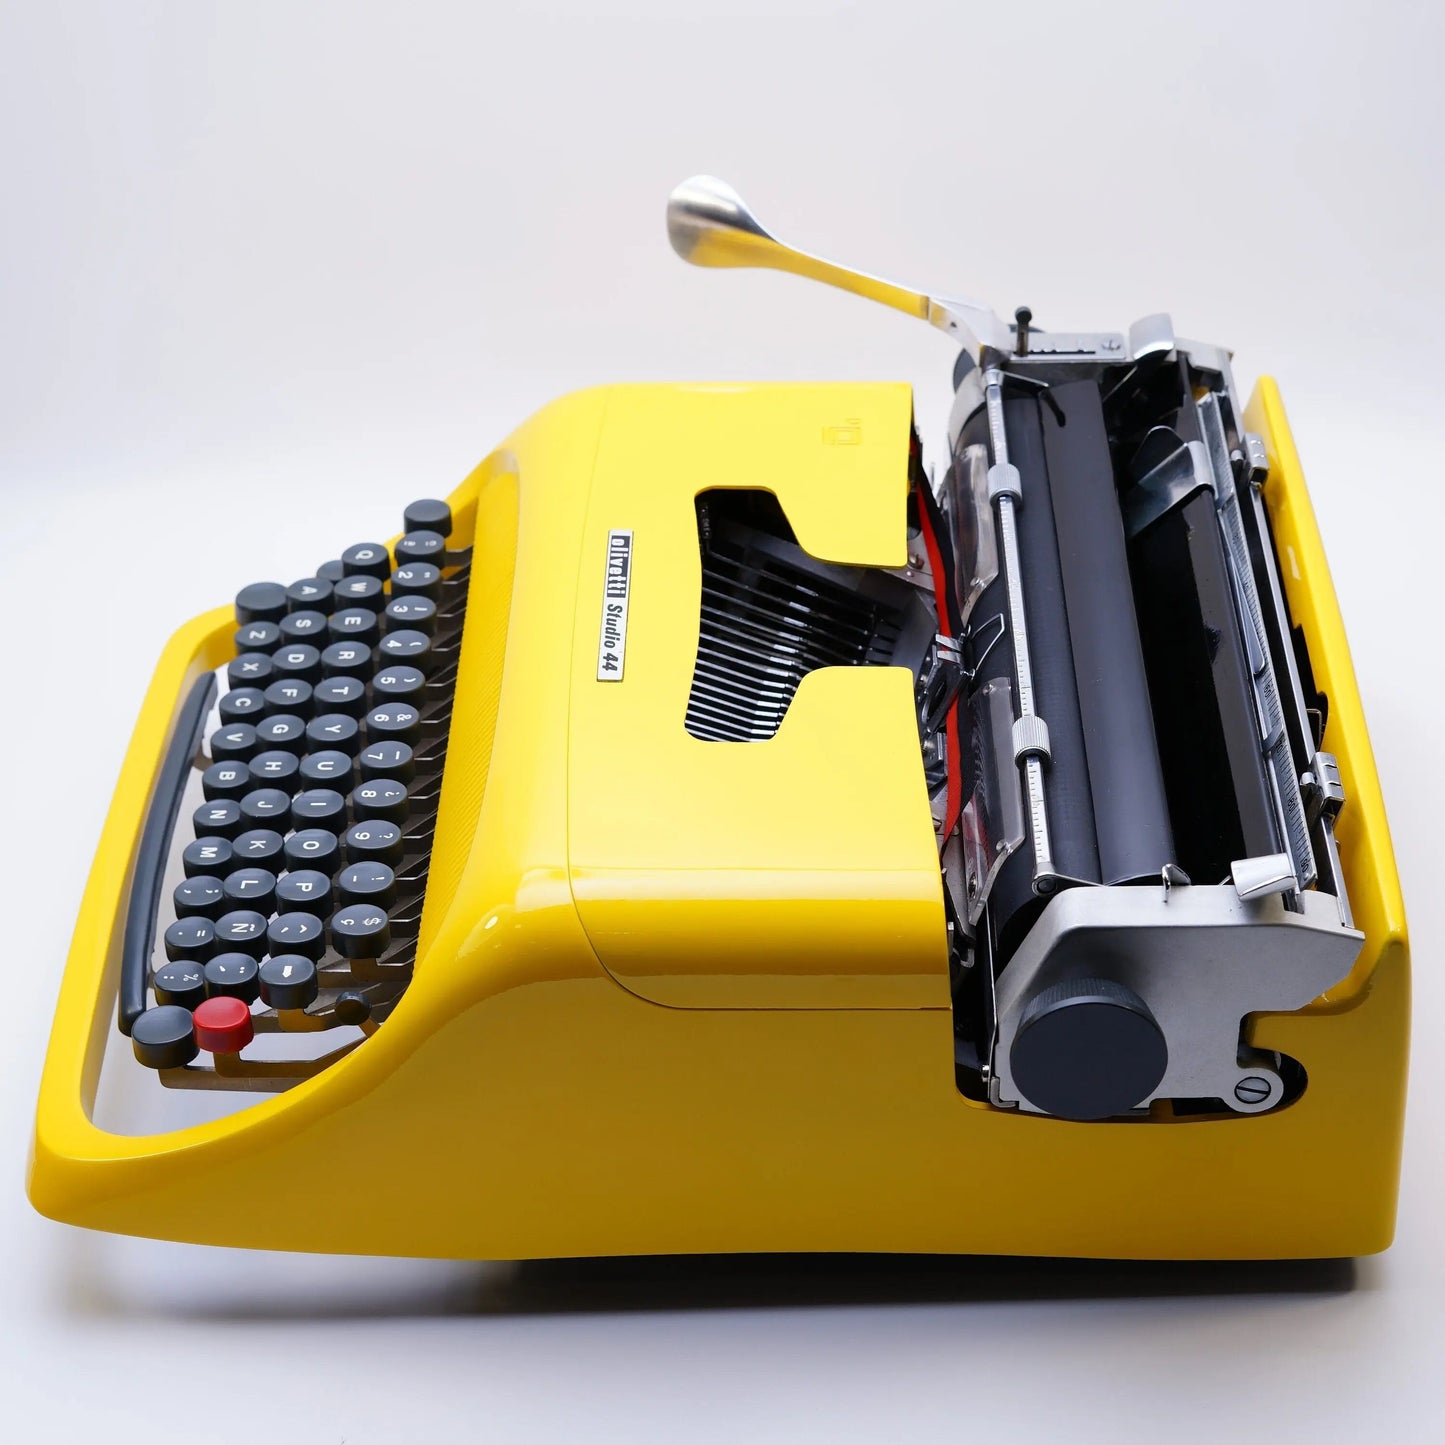 Limited Edition Olivetti Studio 44 Yellow Typewriter, Vintage, Manual Portable, Professionally Serviced by Typewriter.Company - ElGranero Typewriter.Company